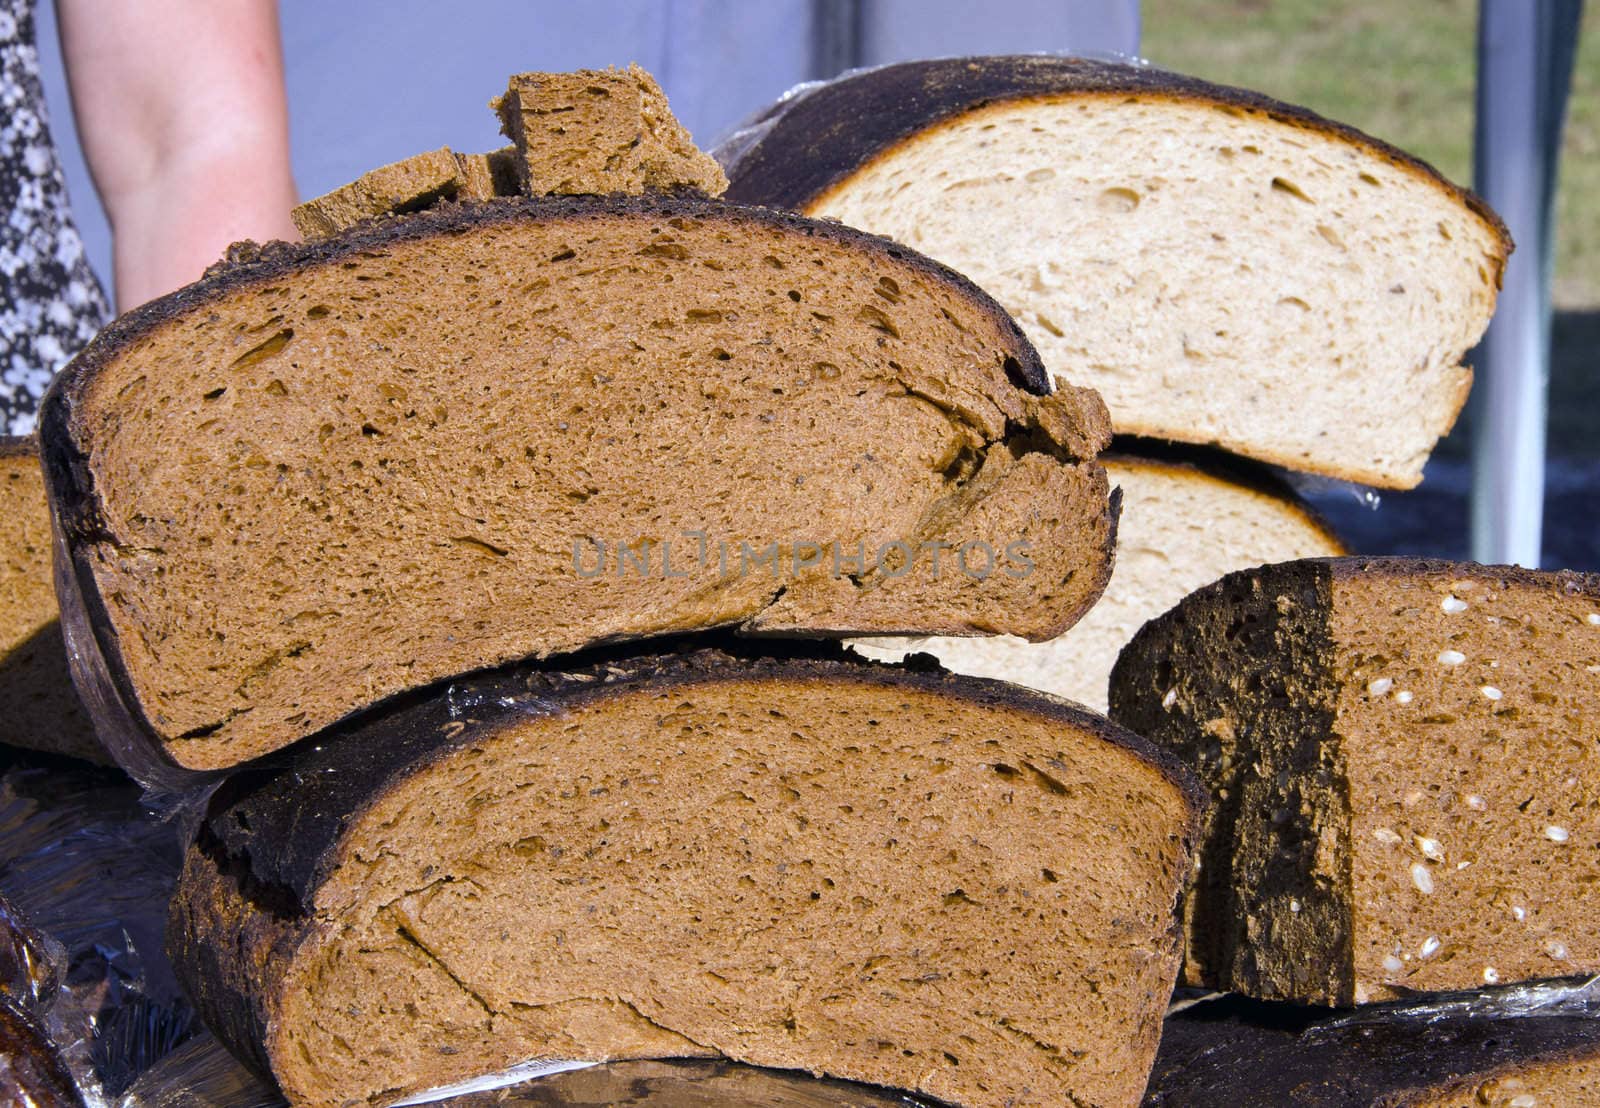 Fresh bake rustic bread sold in street fair market by sauletas